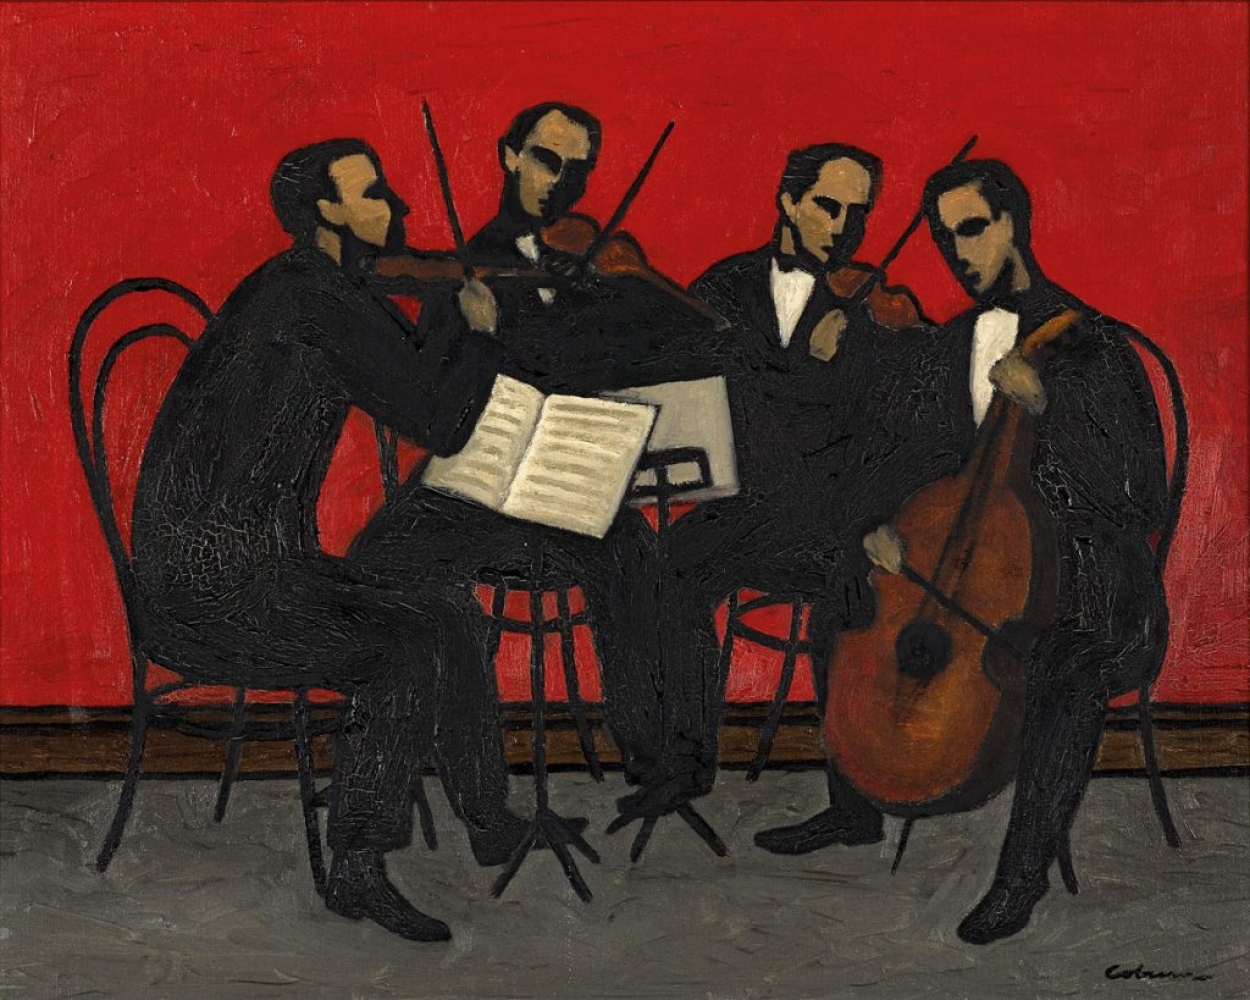 Workshop Research-led Performance: the String Quartets of Béla Bartók and Gian Francesco Malipiero